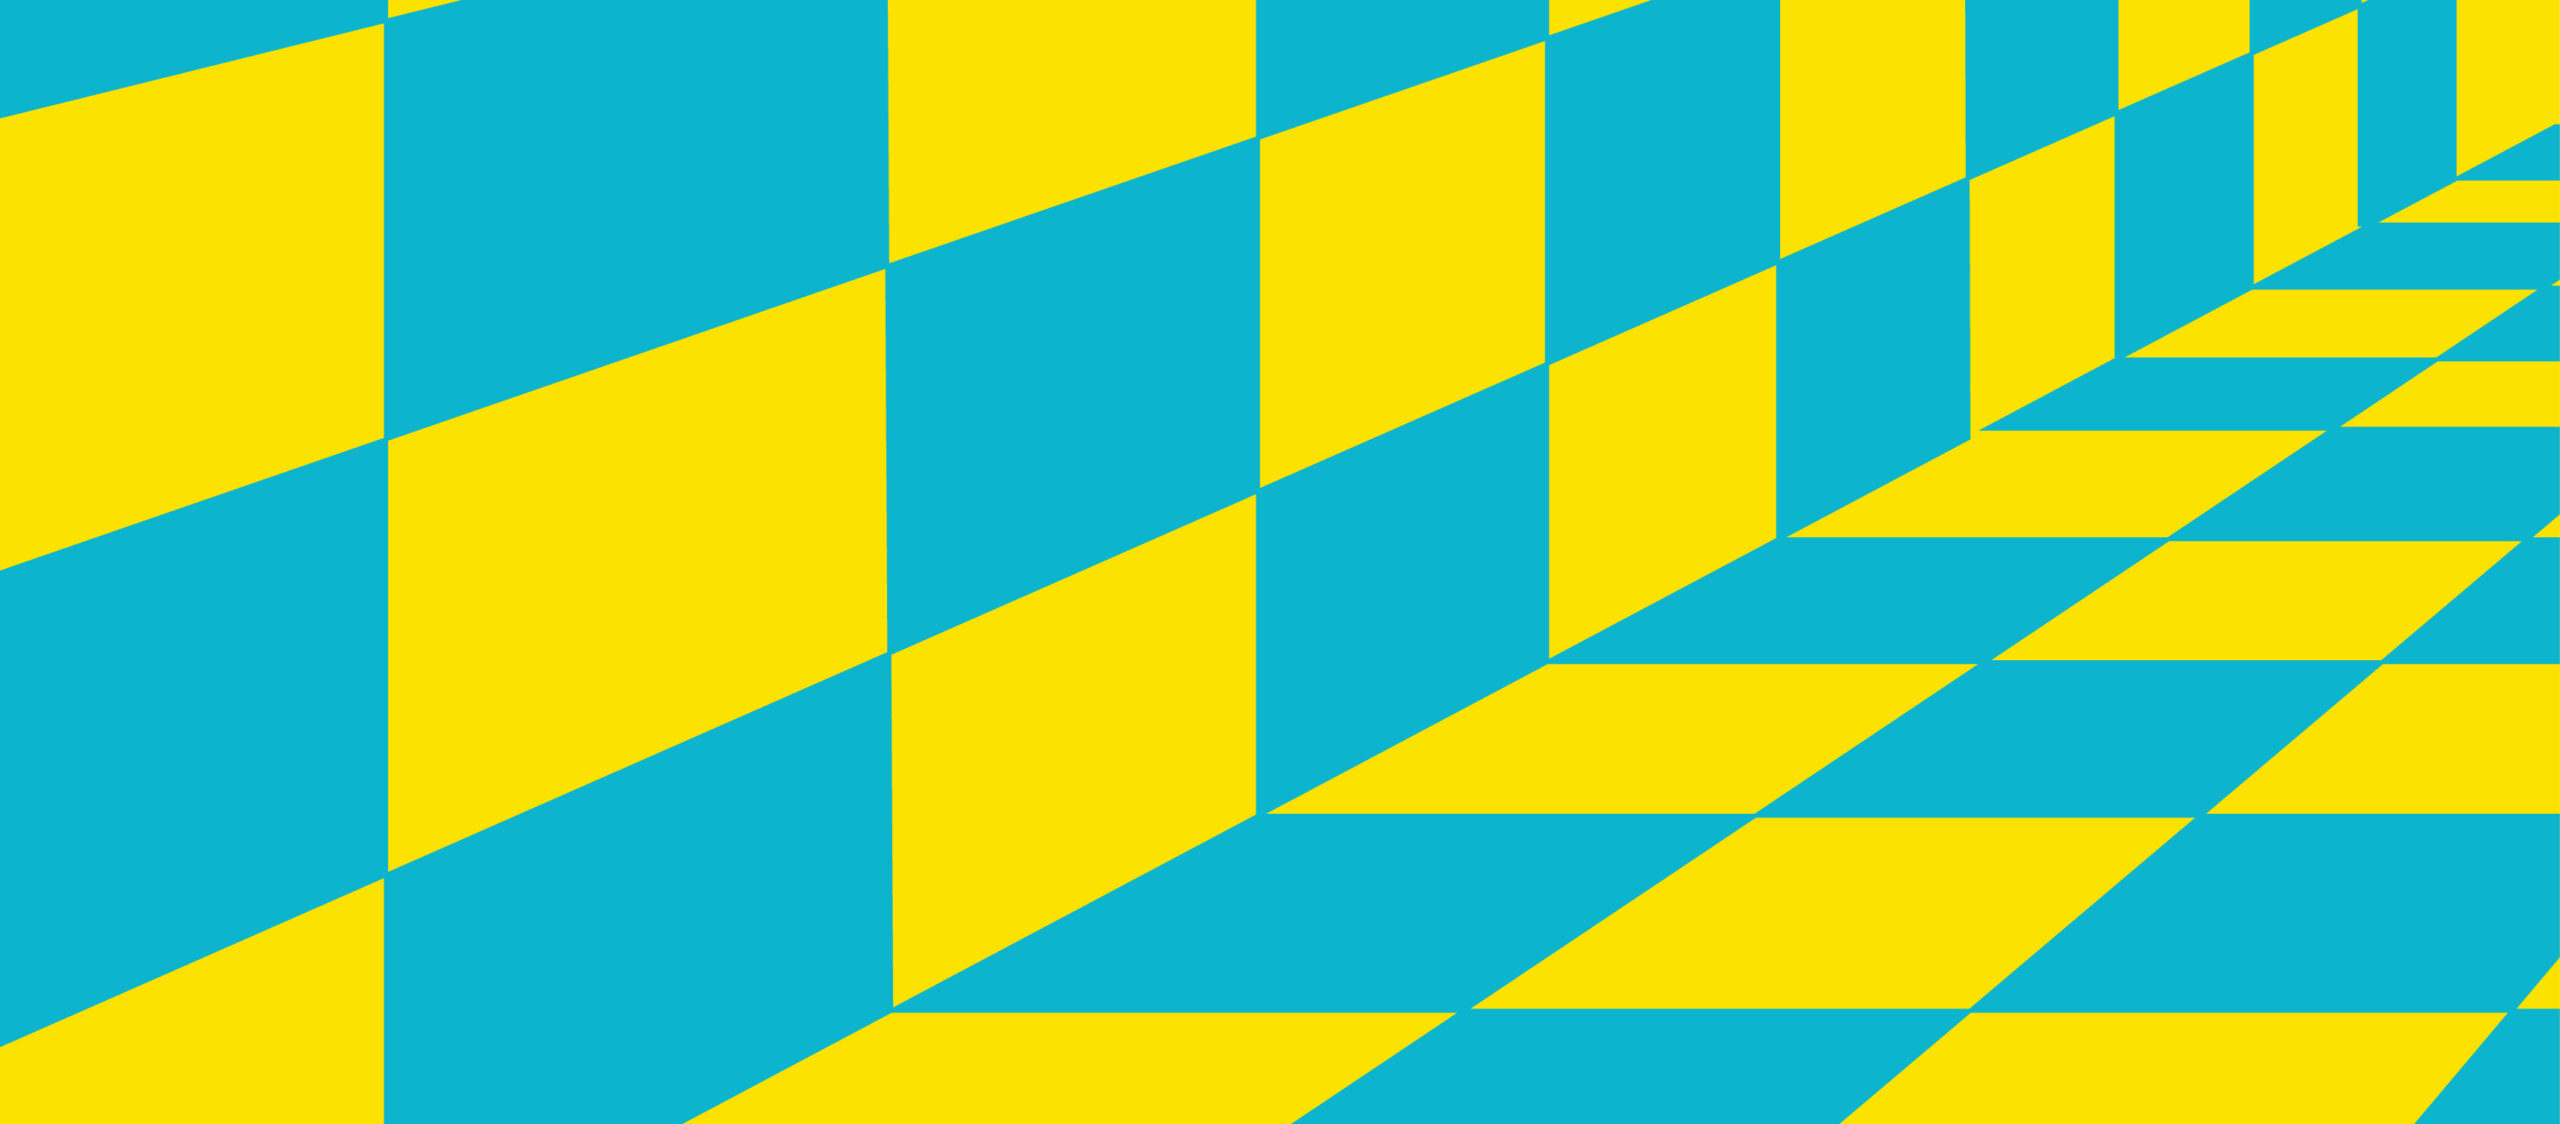 blue & yellow chequered graphic image